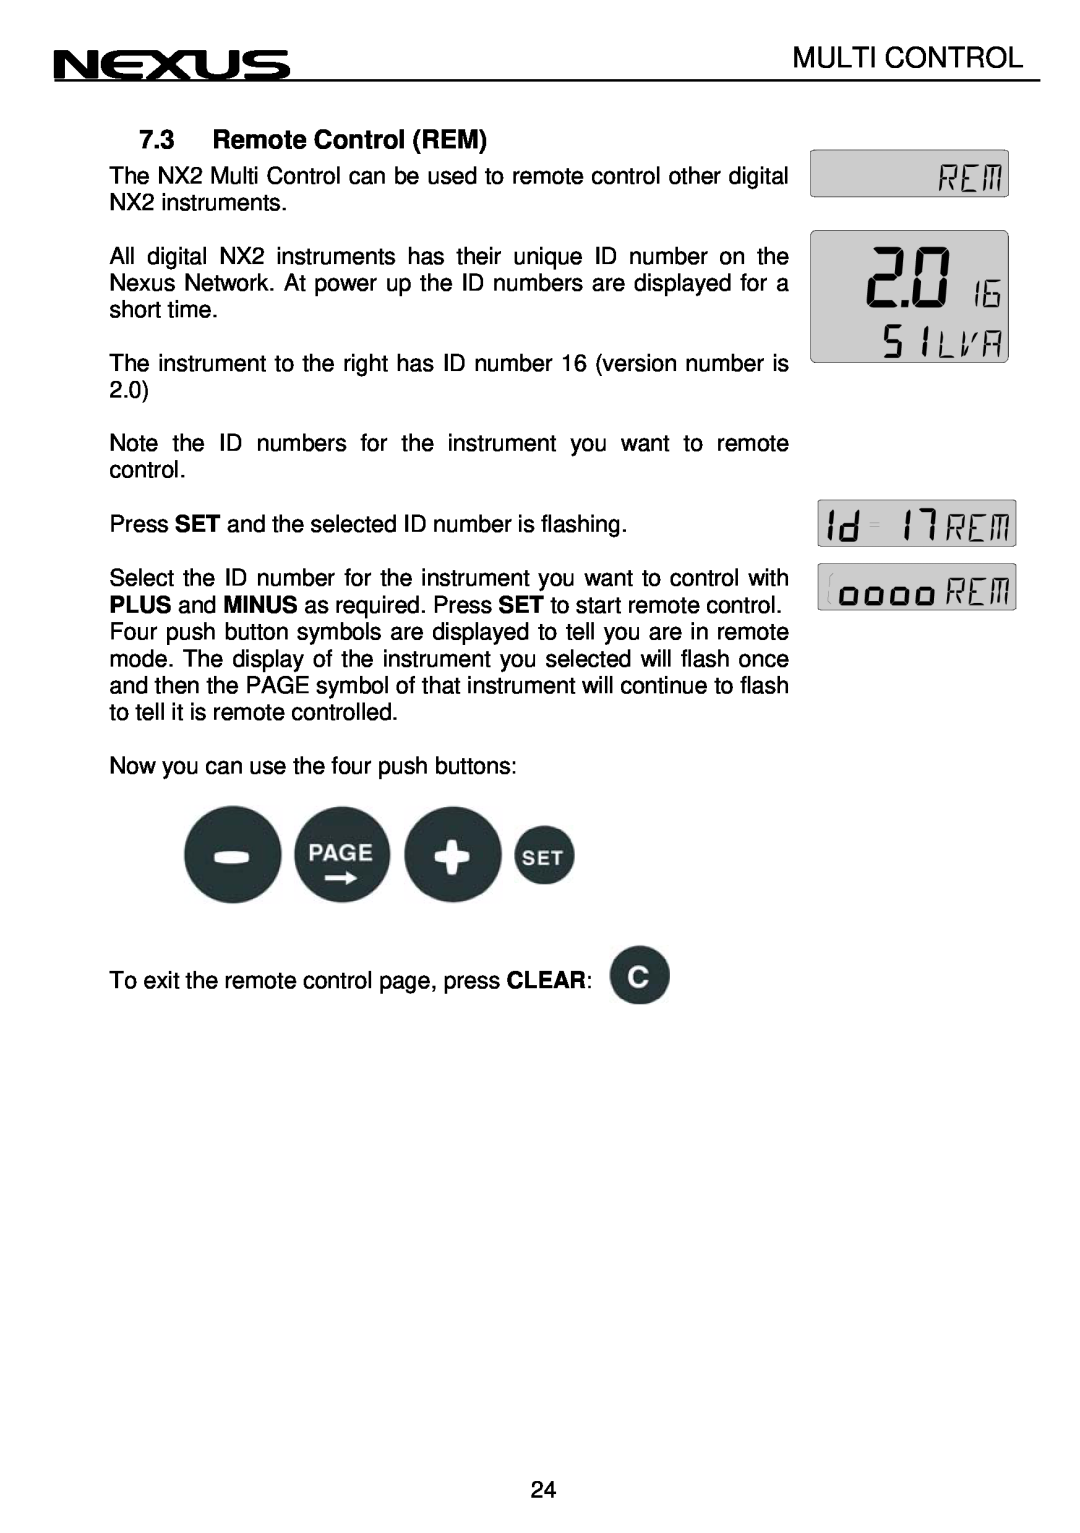 Nexus 21 Multi Control operation manual 7.3Remote Control REM 